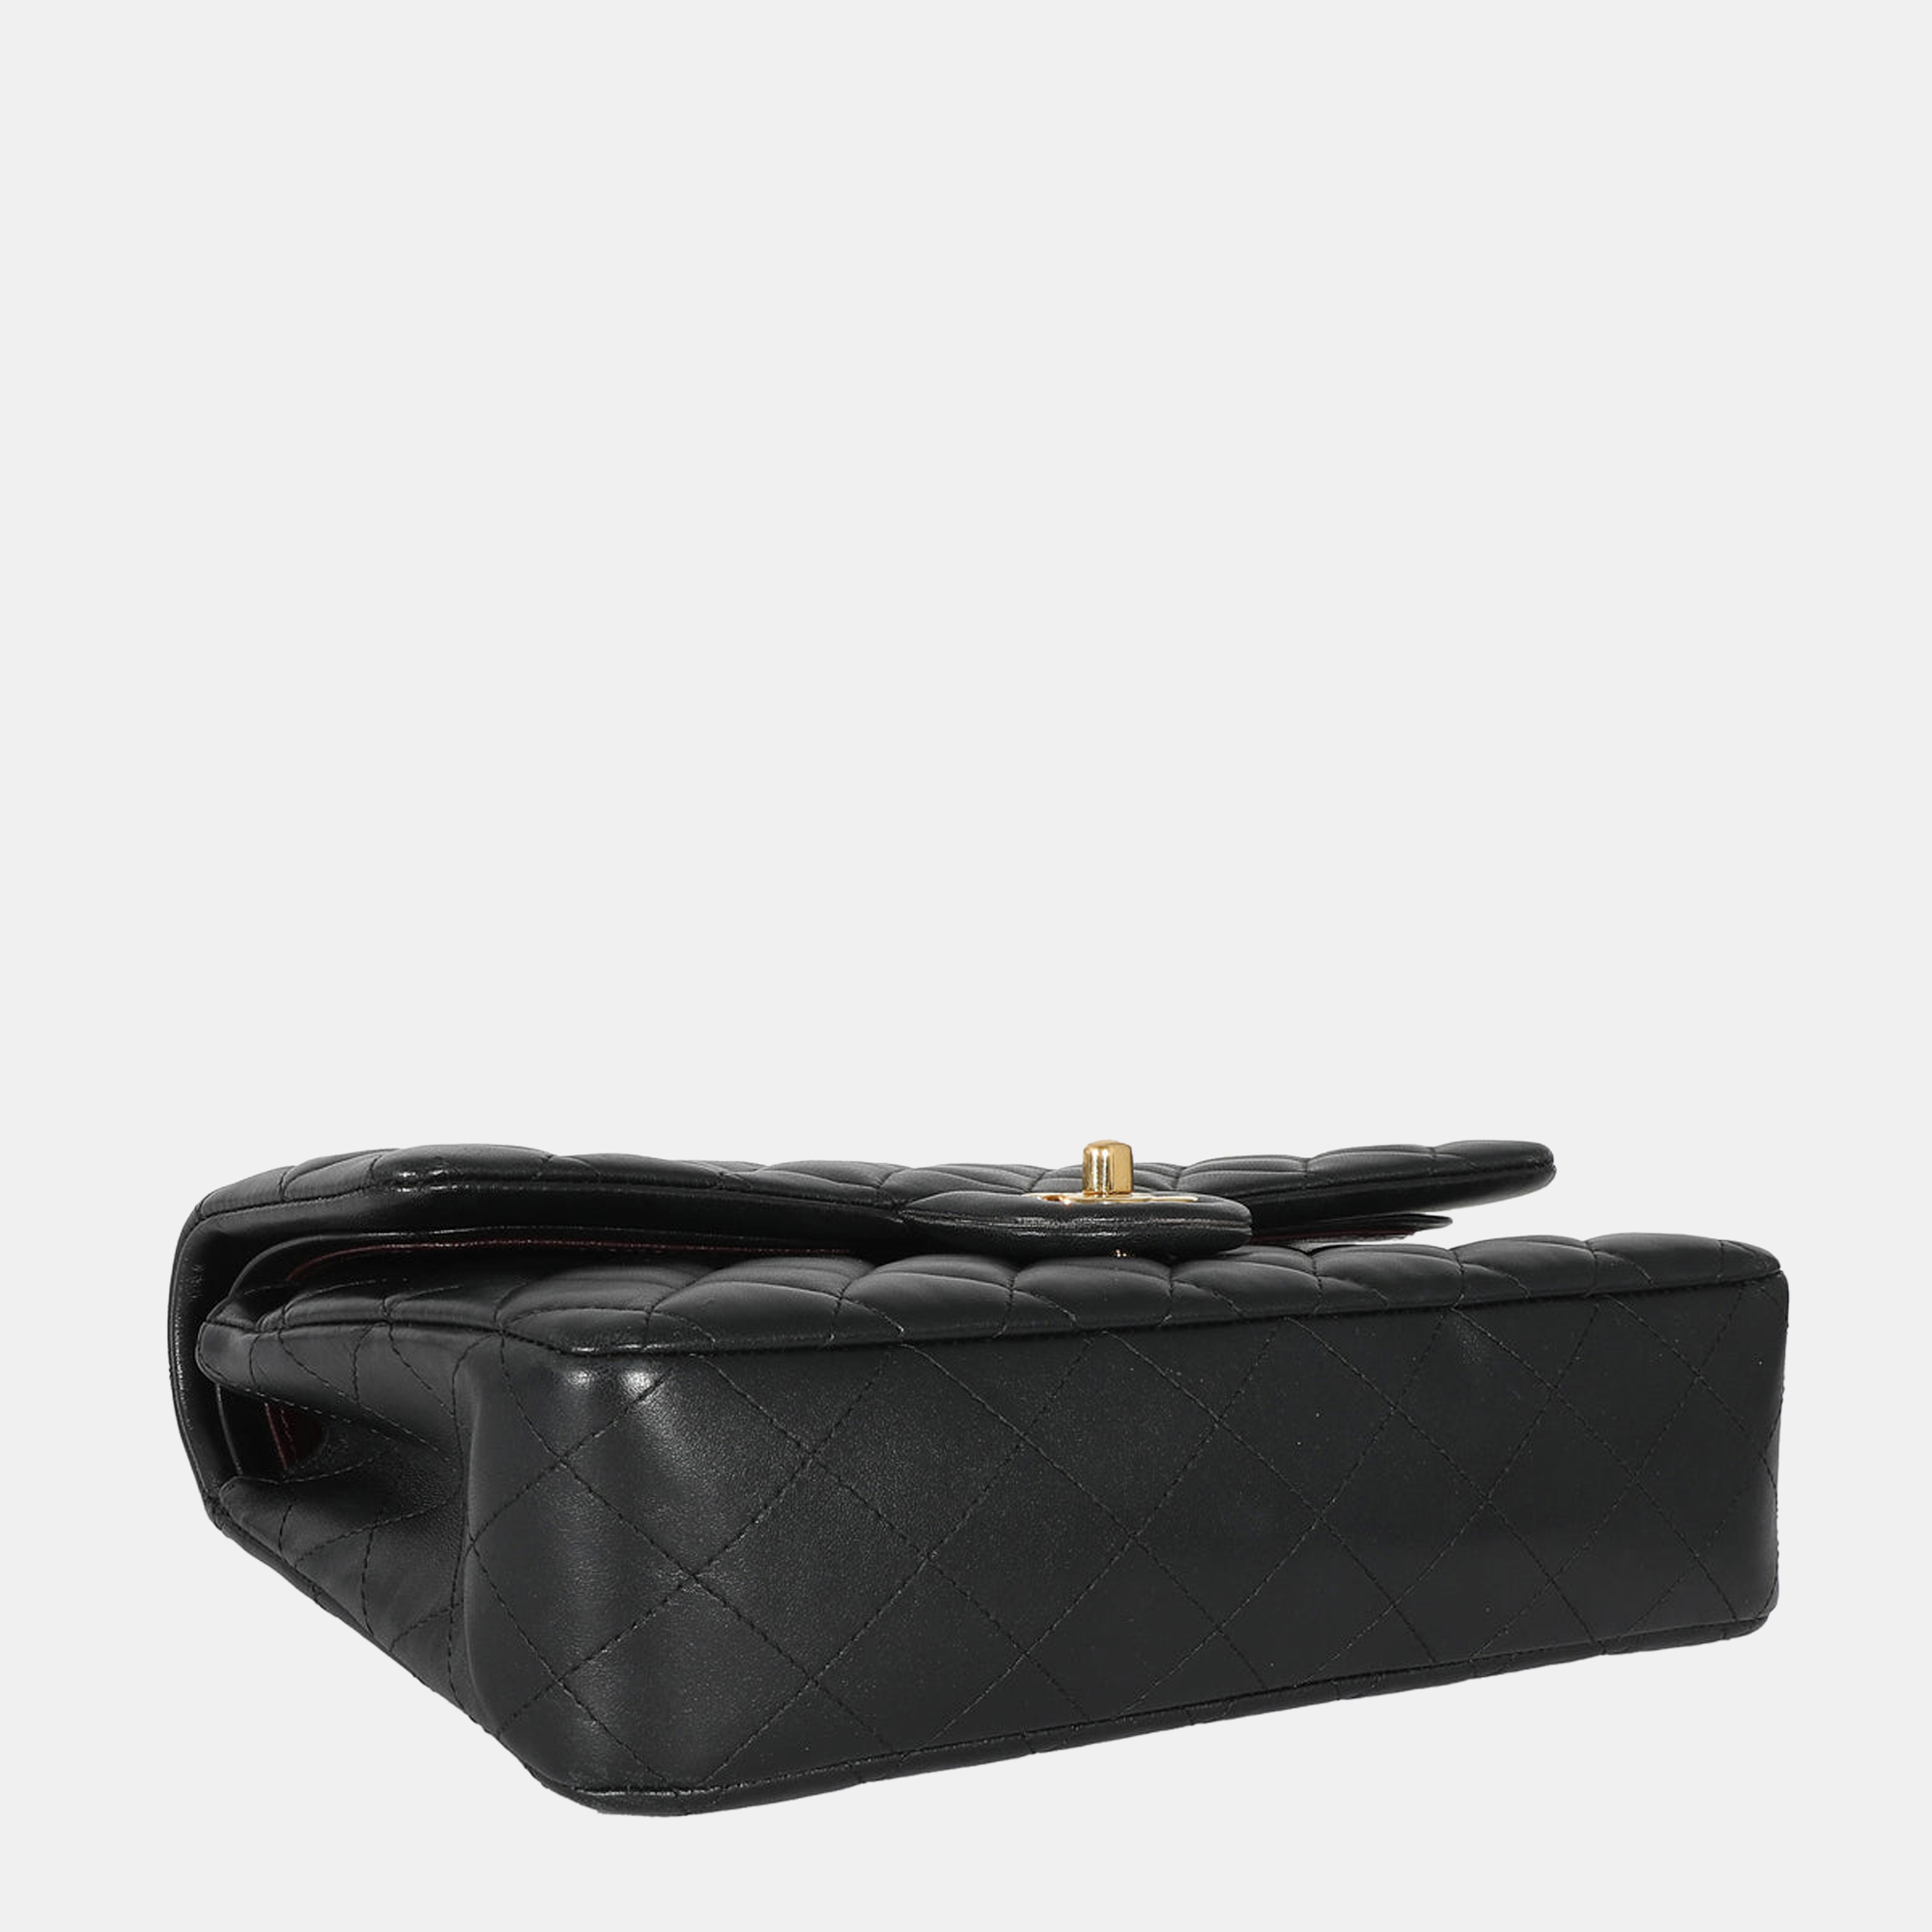 Chanel Black Lambskin Leather Medium Classic Double Flap Shoulder Bag